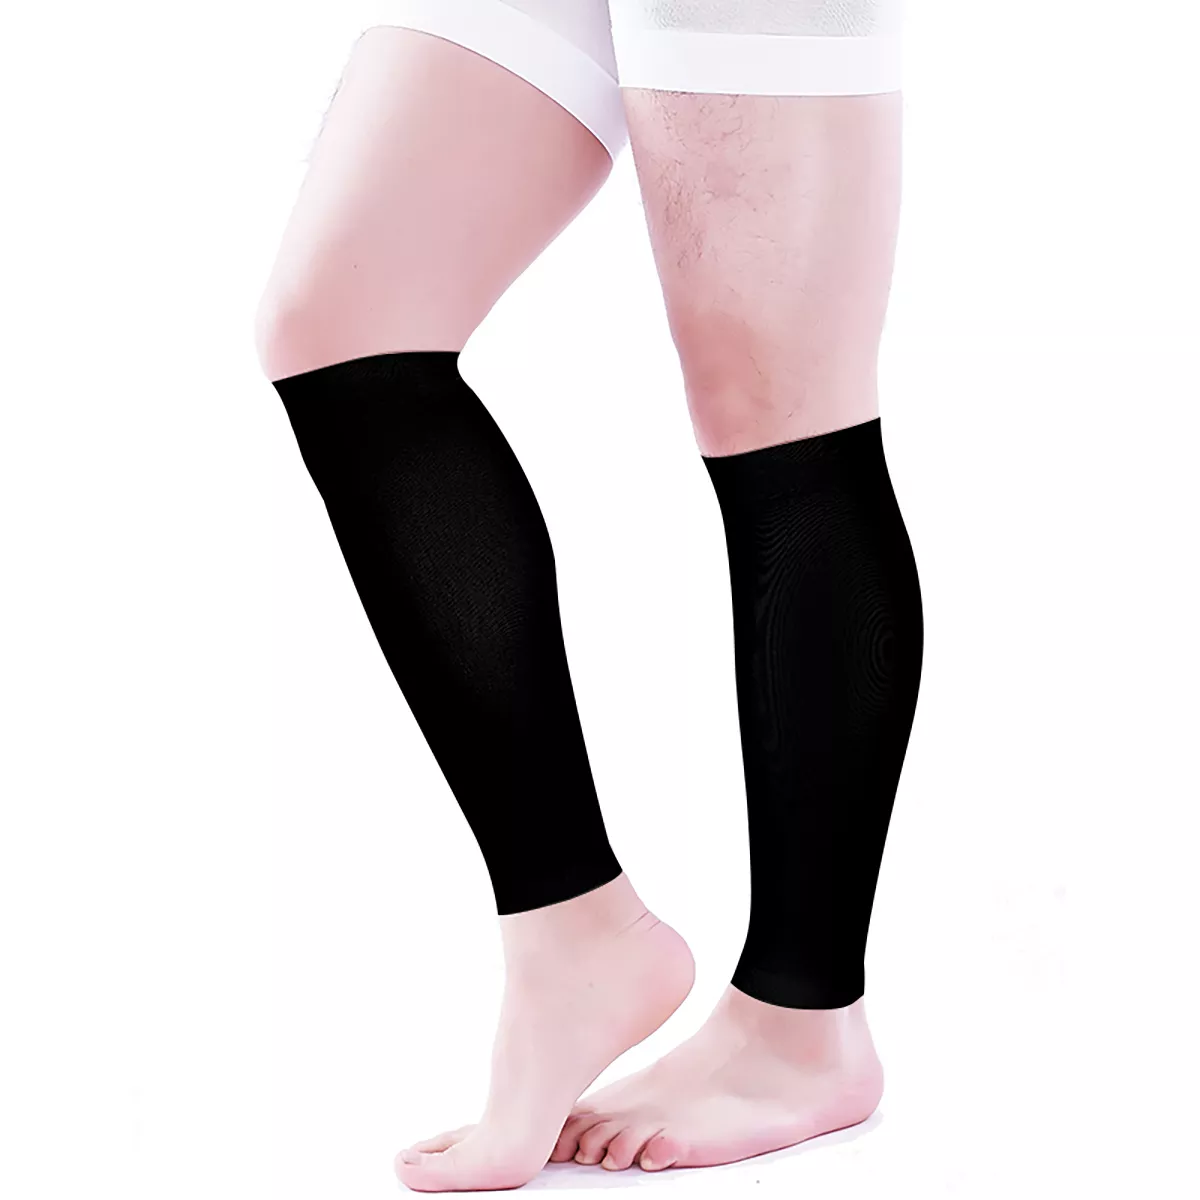 Varcoh ® 8-15 mmHg Men Calf Sleeve Compression Socks Black